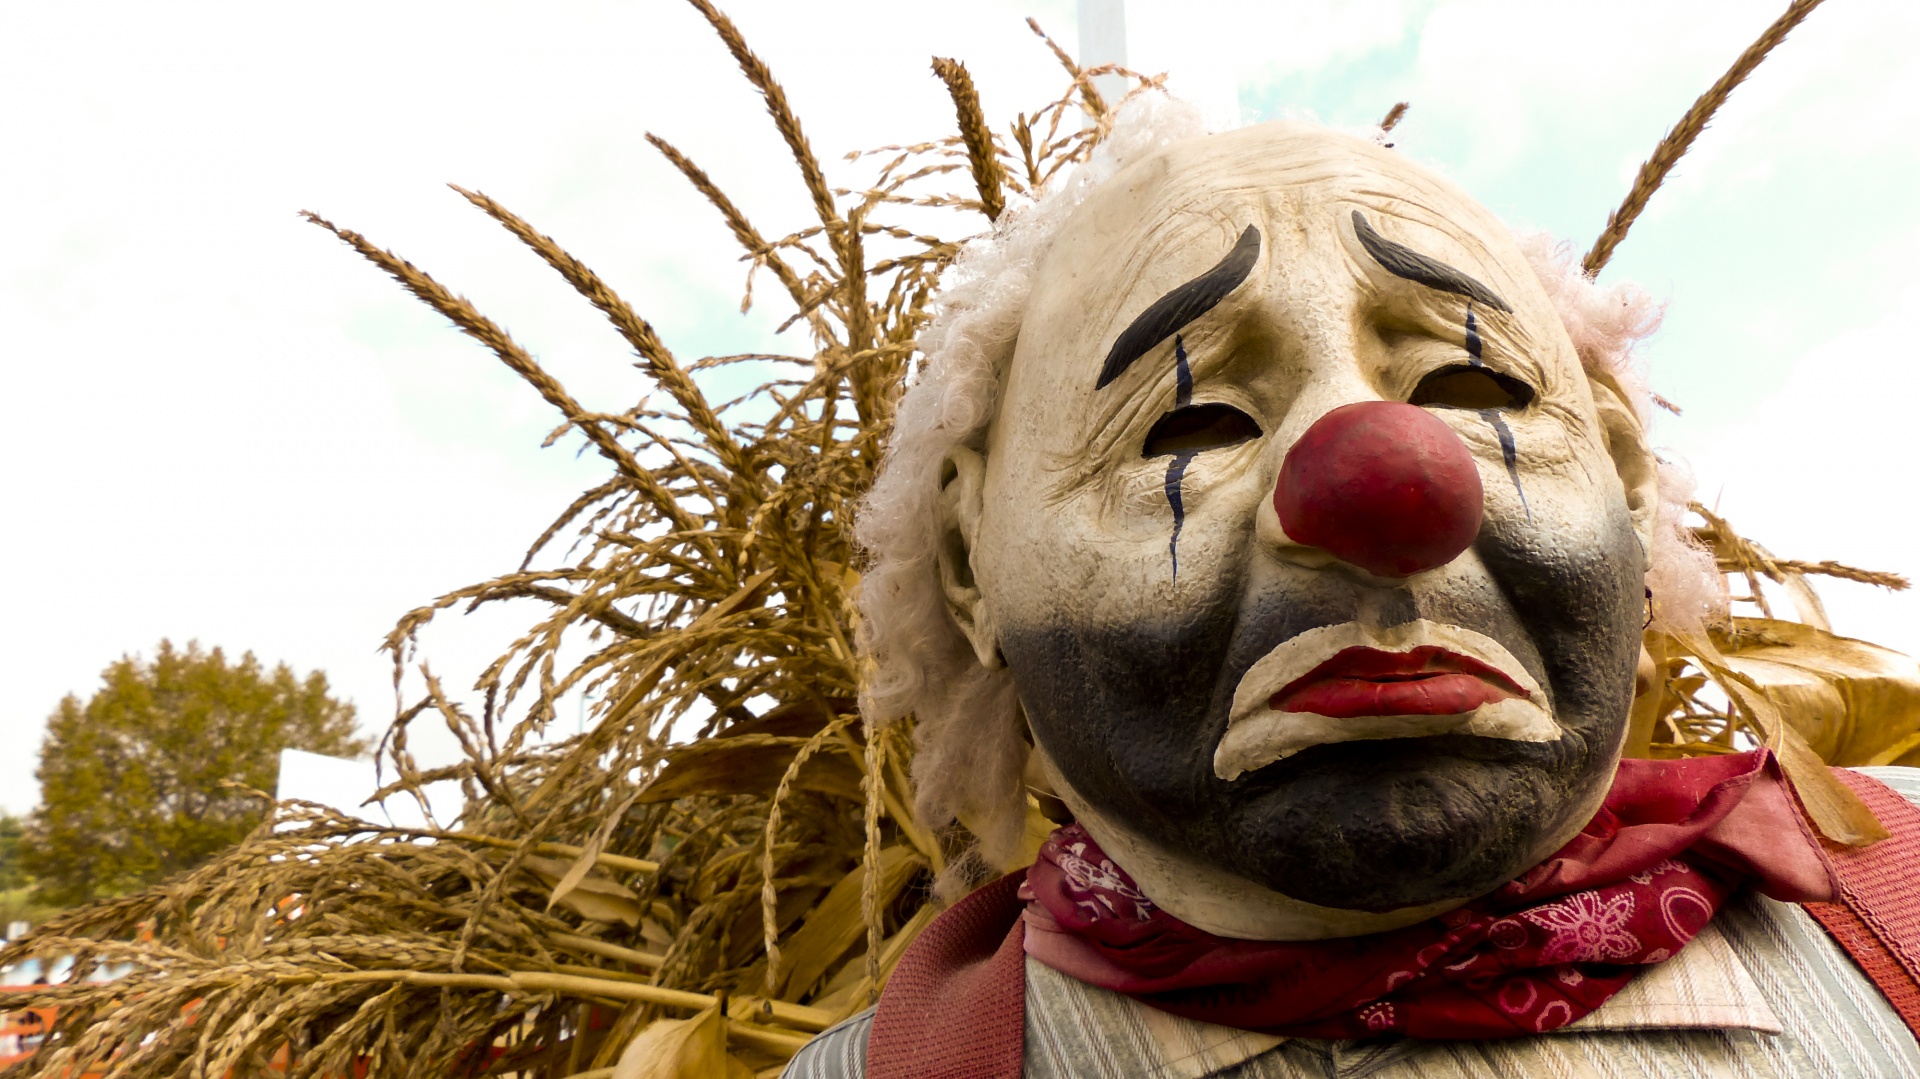 Sad face clown in a corn field at Halloween